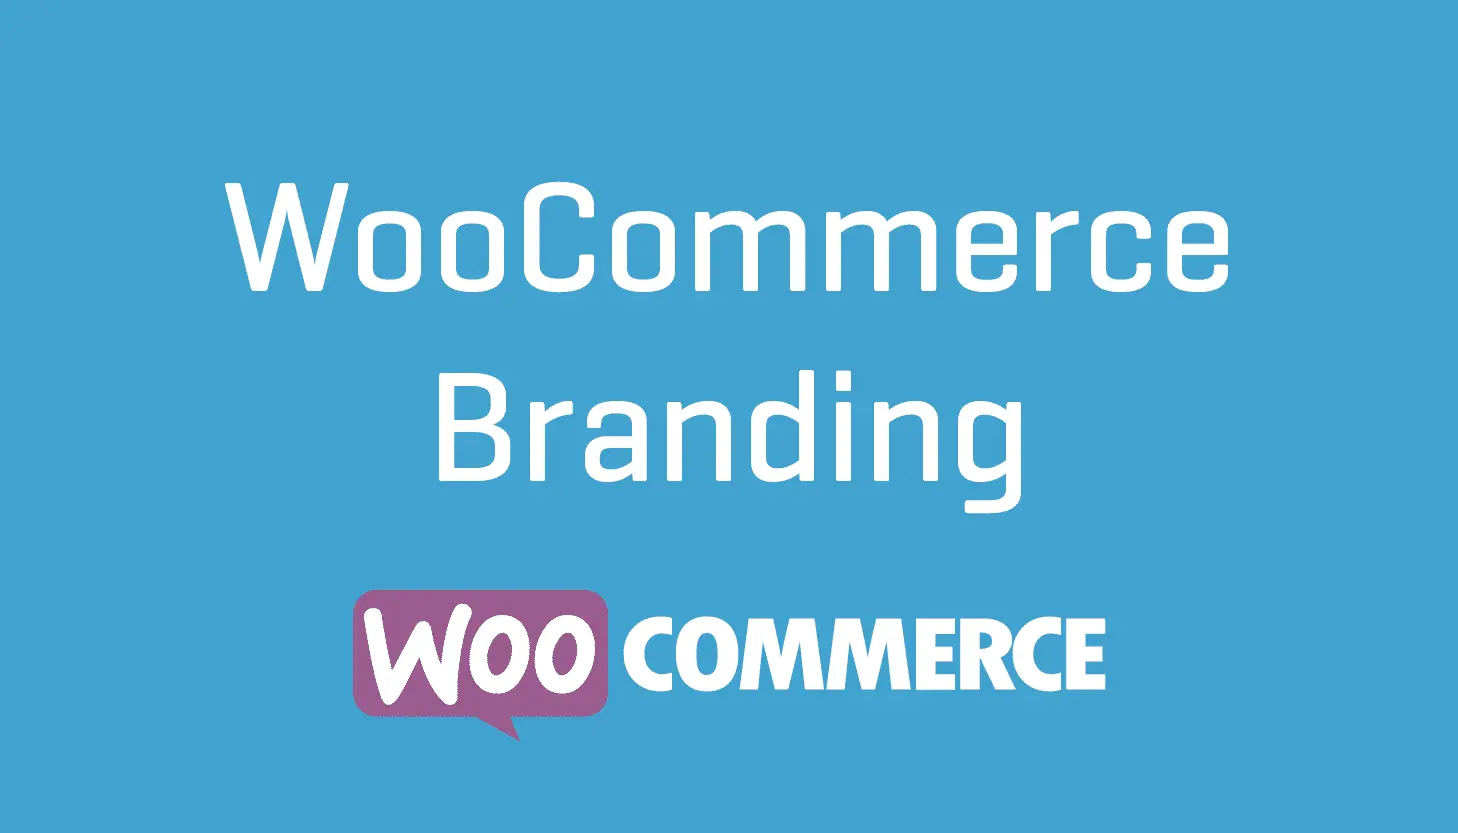 Download the WooCommerce Branding plugin